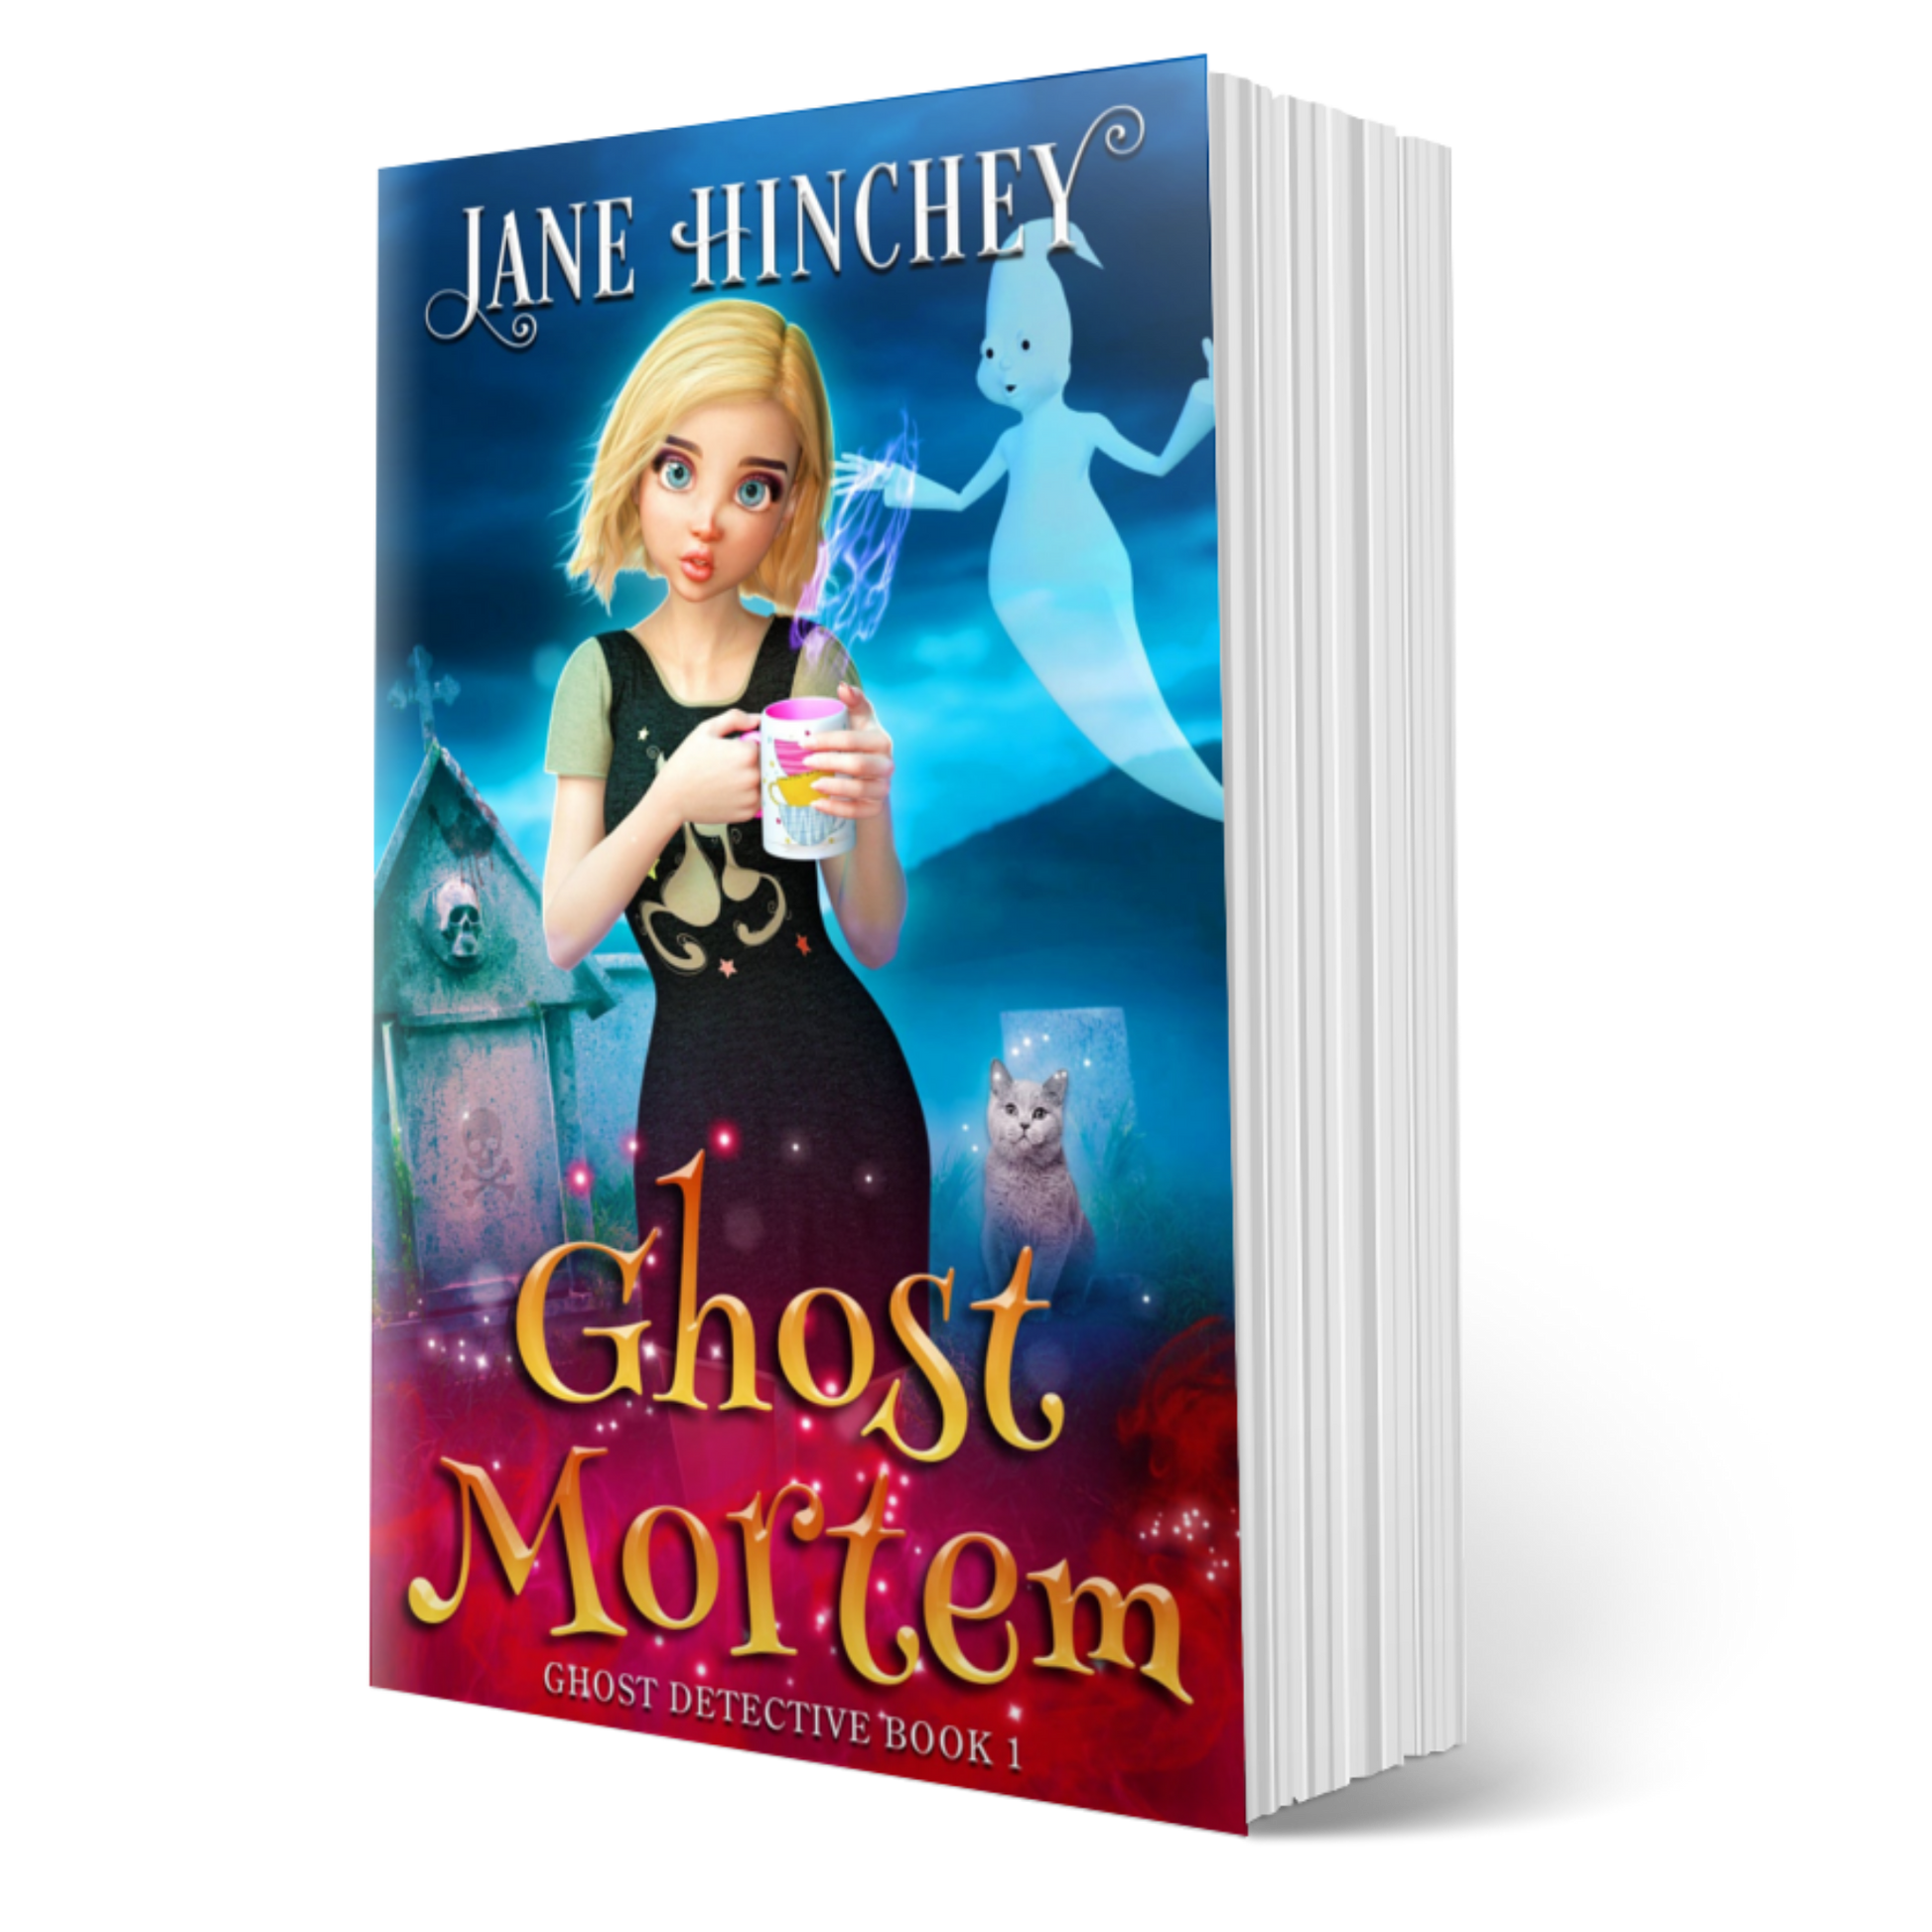 Ghost Mortem by Jane Hinchey